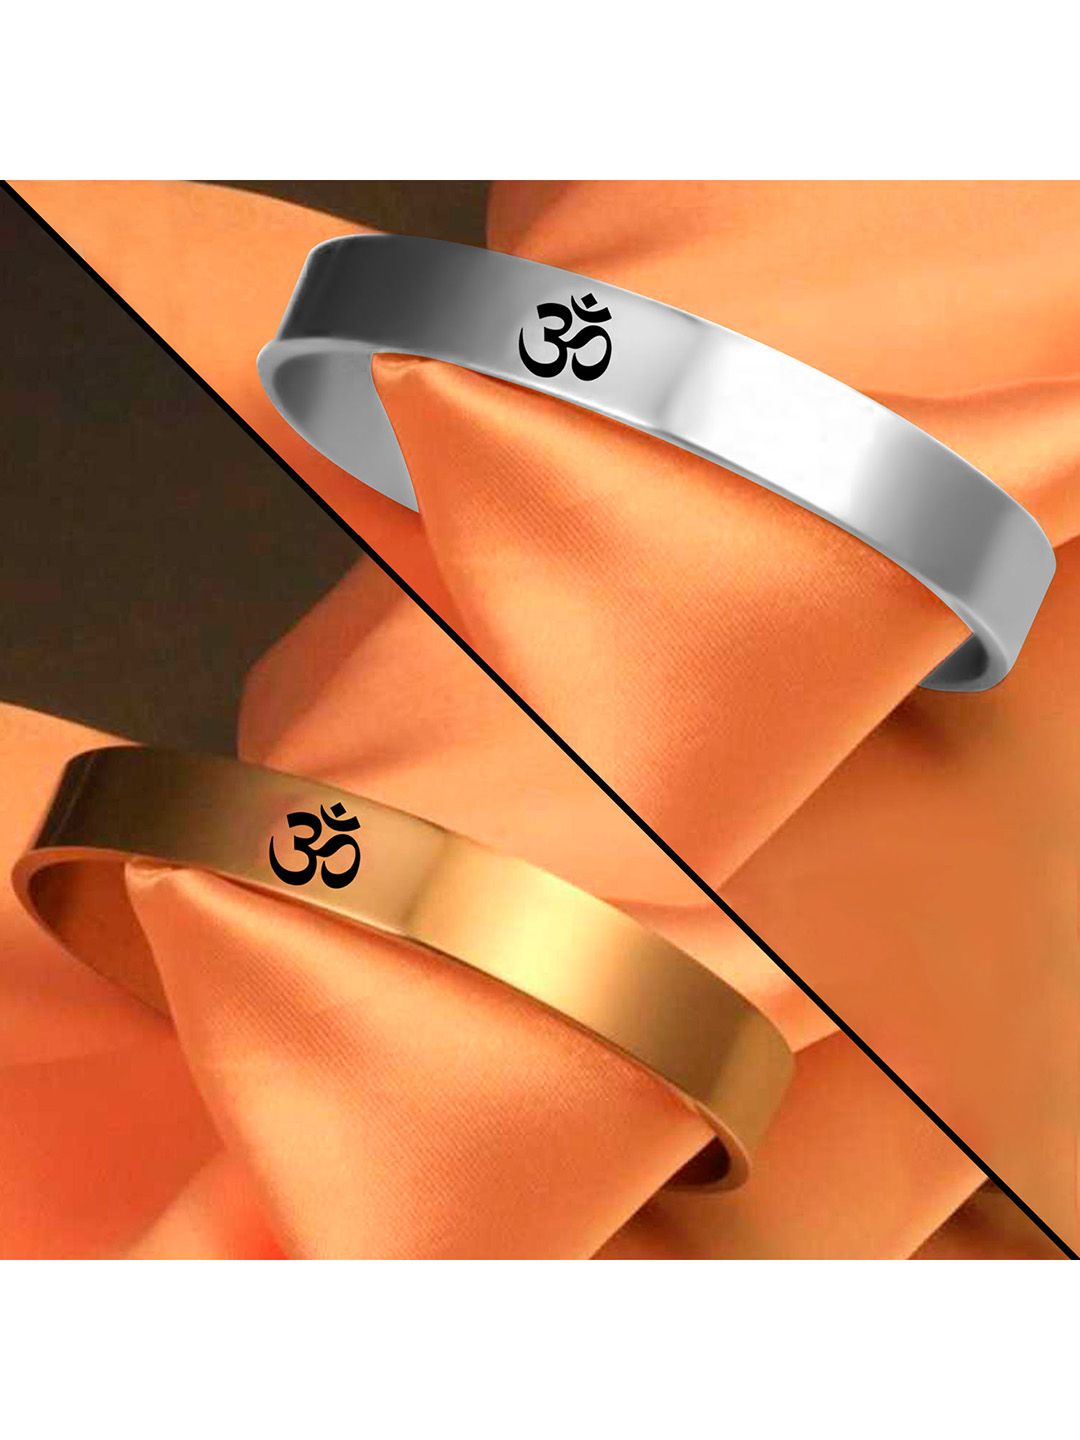 Silver Shine Unisex Silver-Toned & Gold-Toned Kada Bracelet Price in India